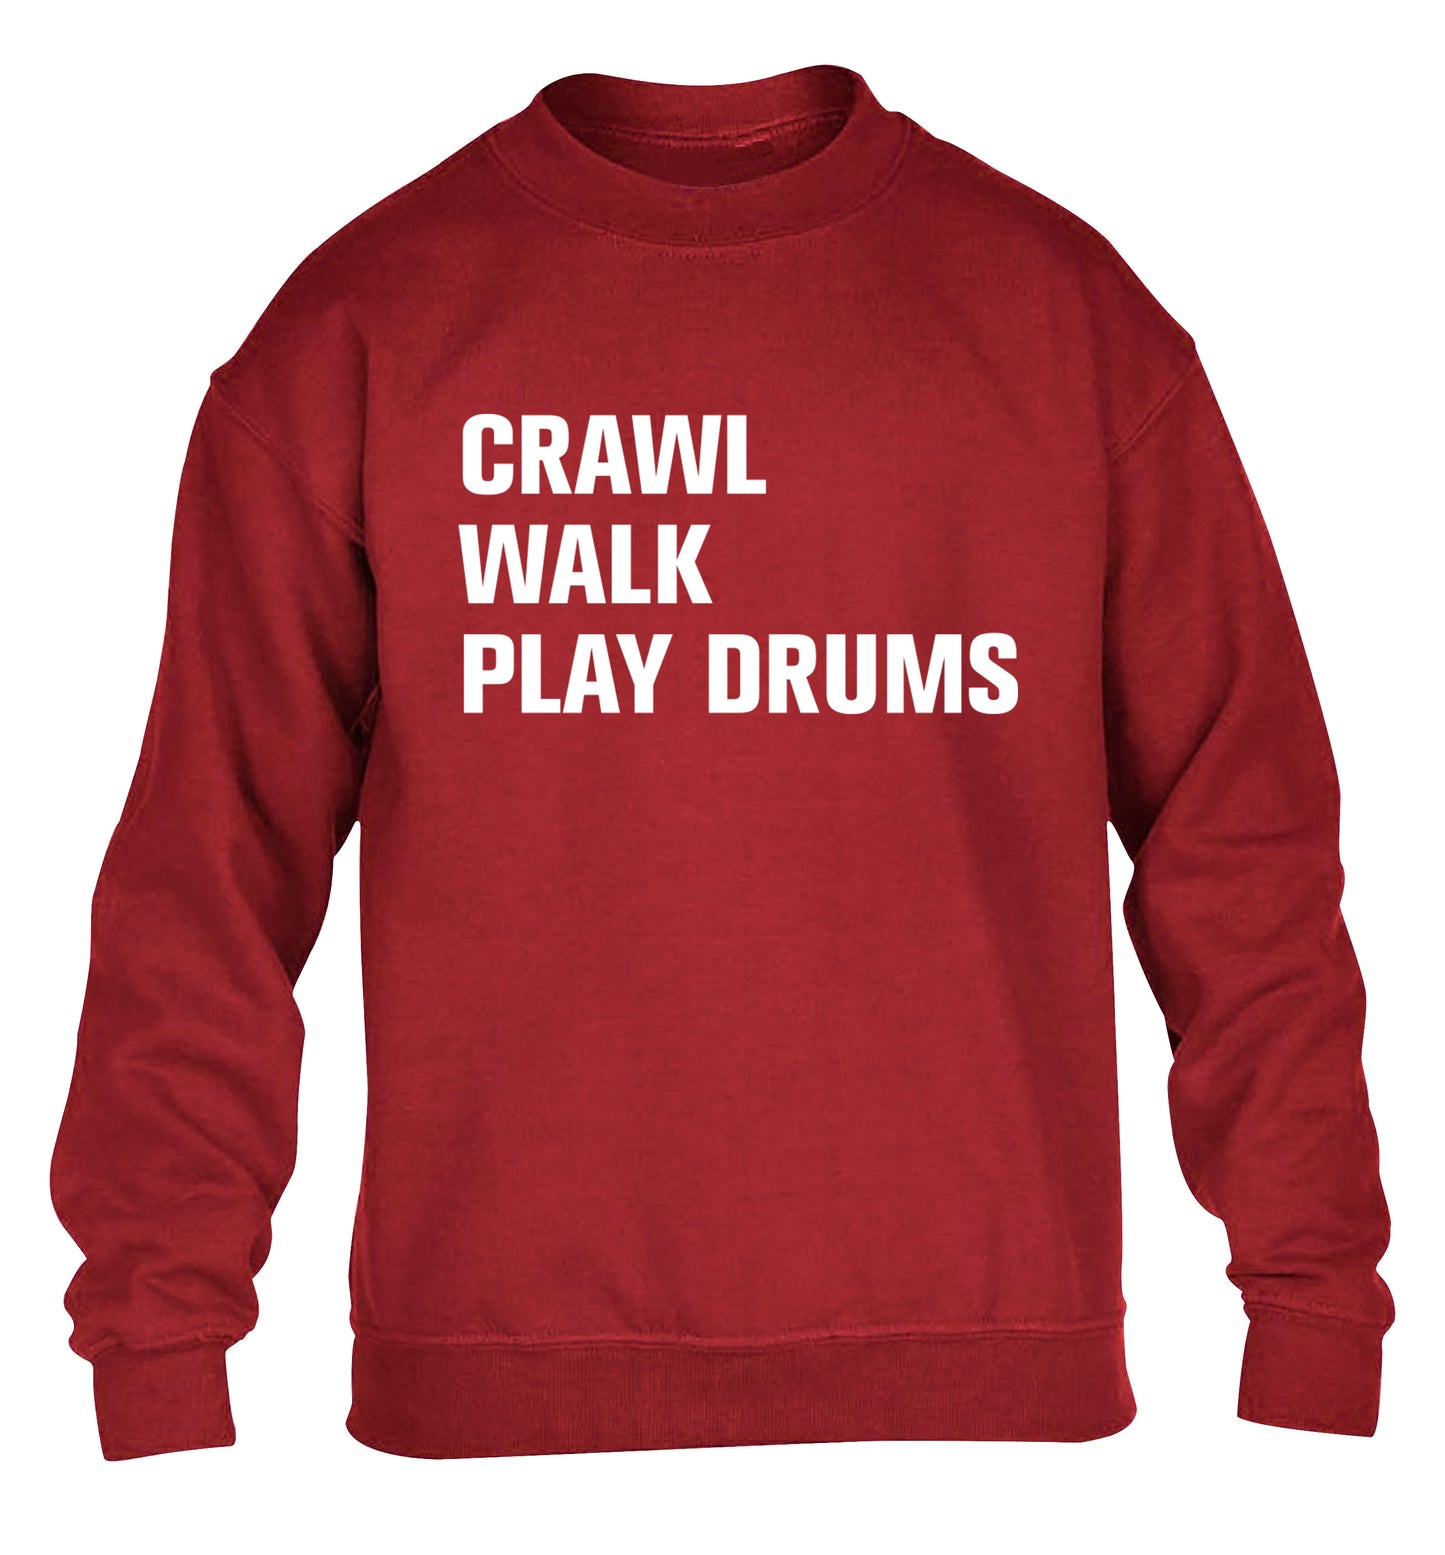 Crawl walk play drums children's grey sweater 12-13 Years